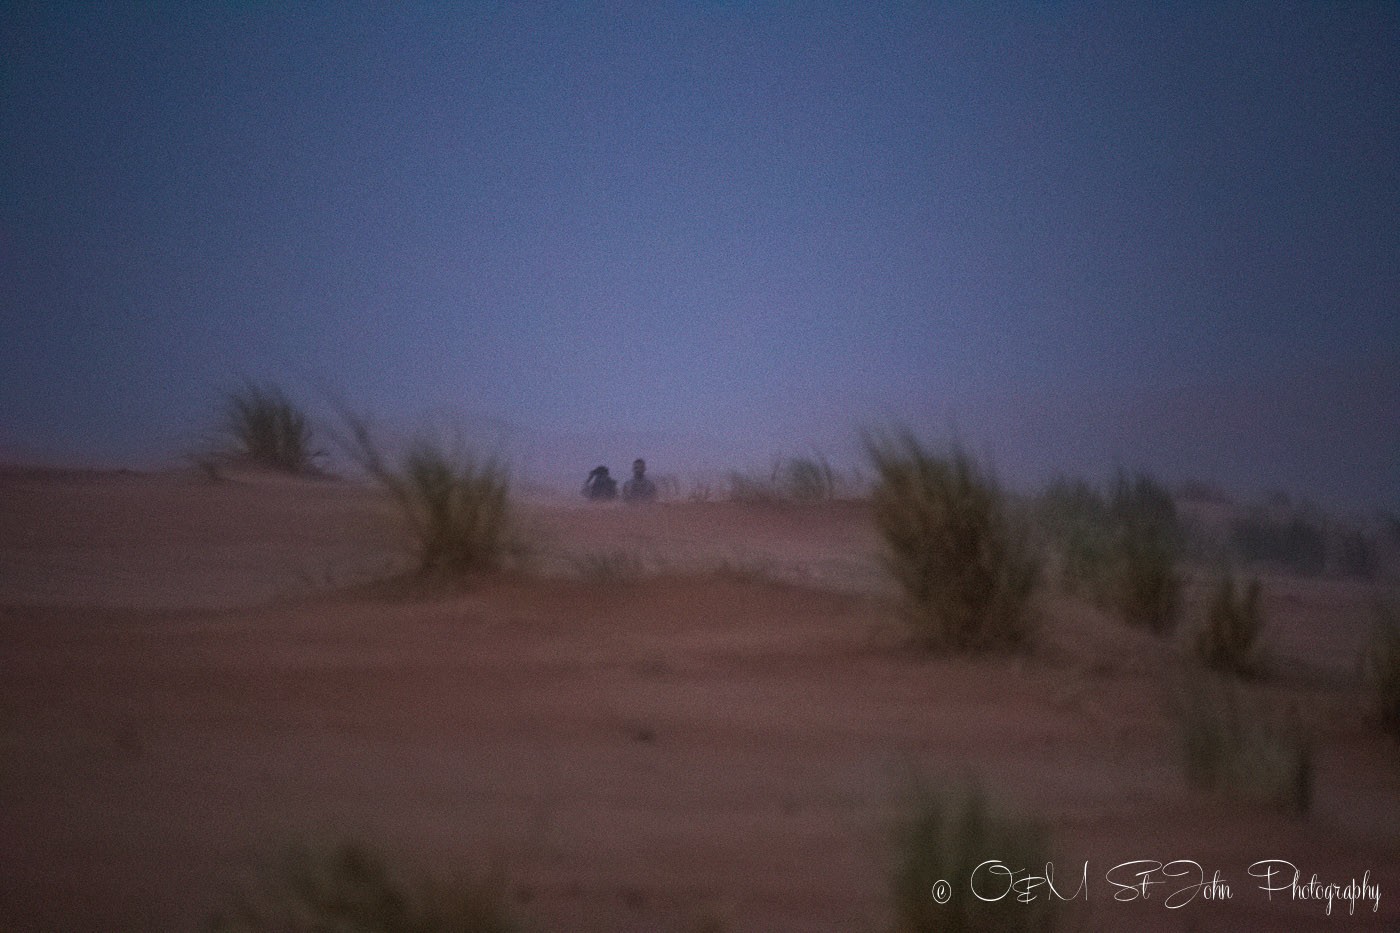 Max and Muhamed in the sandstorm, Erg Chebbi, Sahara Desert. Morocco